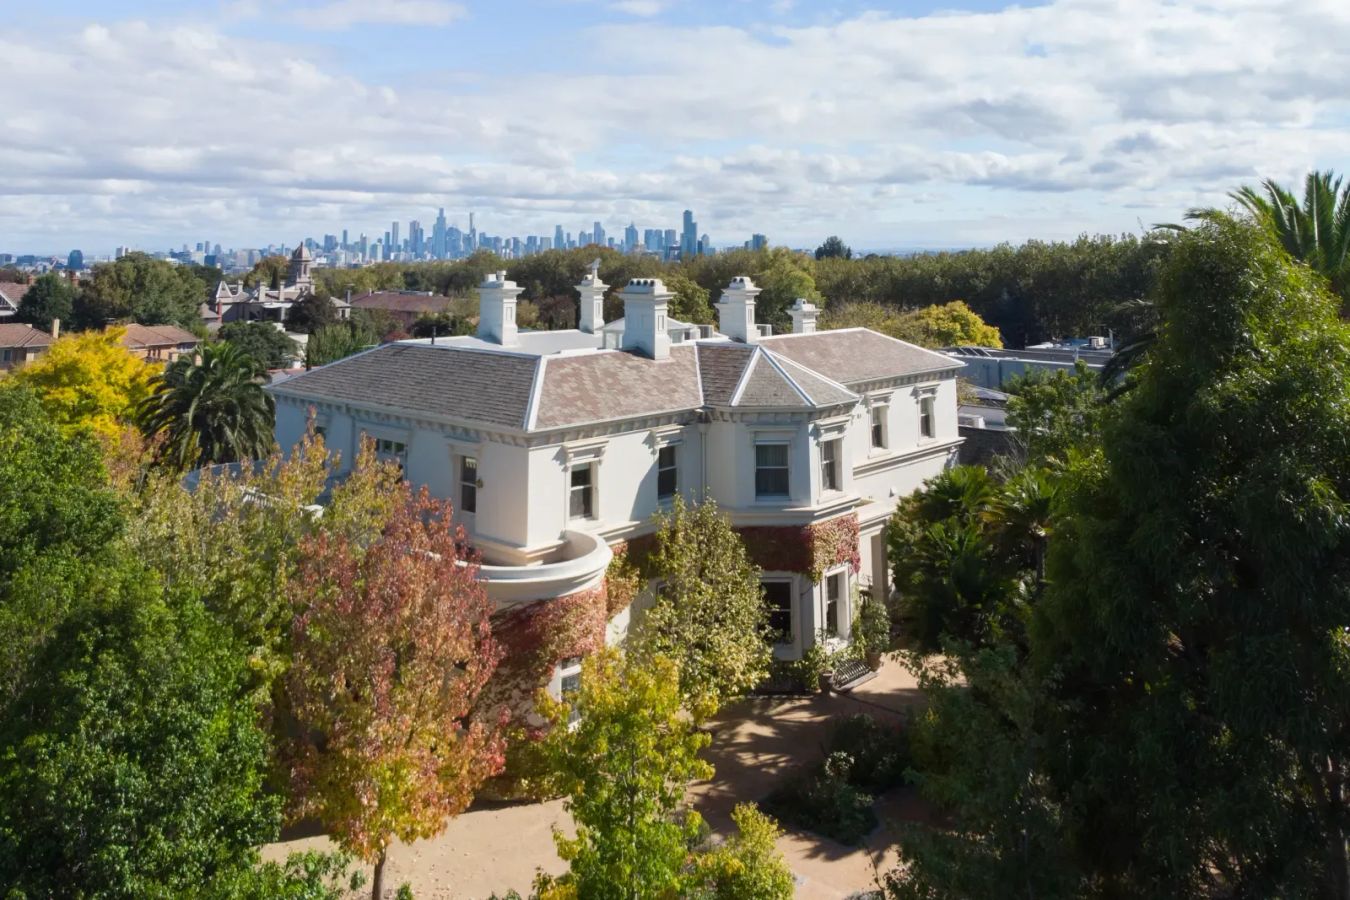 Rupert Murdoch’s nephew Michael Kantor lists $24 million house for sale - The Age